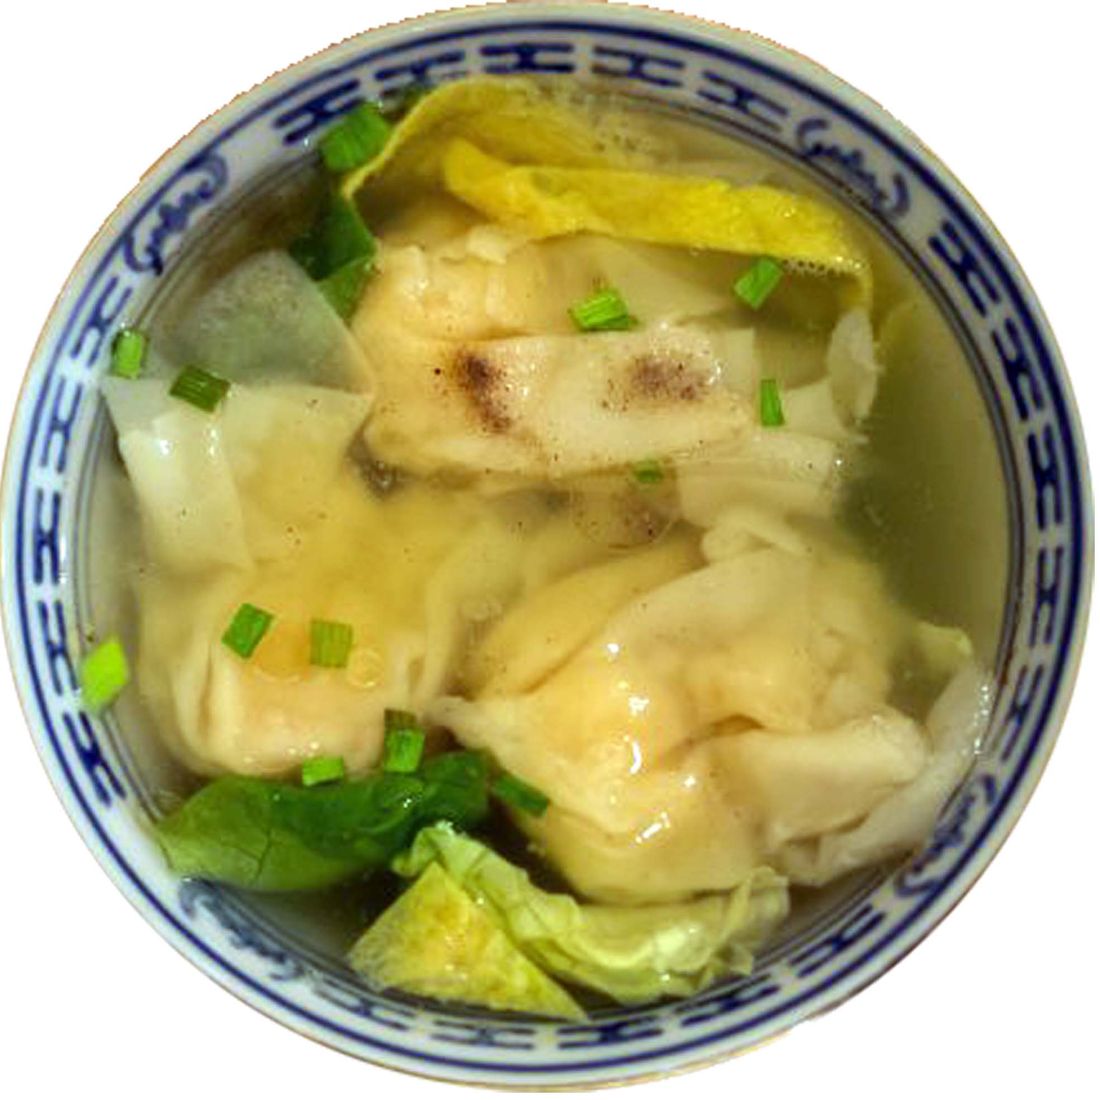 Wanton Suppe - Kilin Palast China Food in Lachen